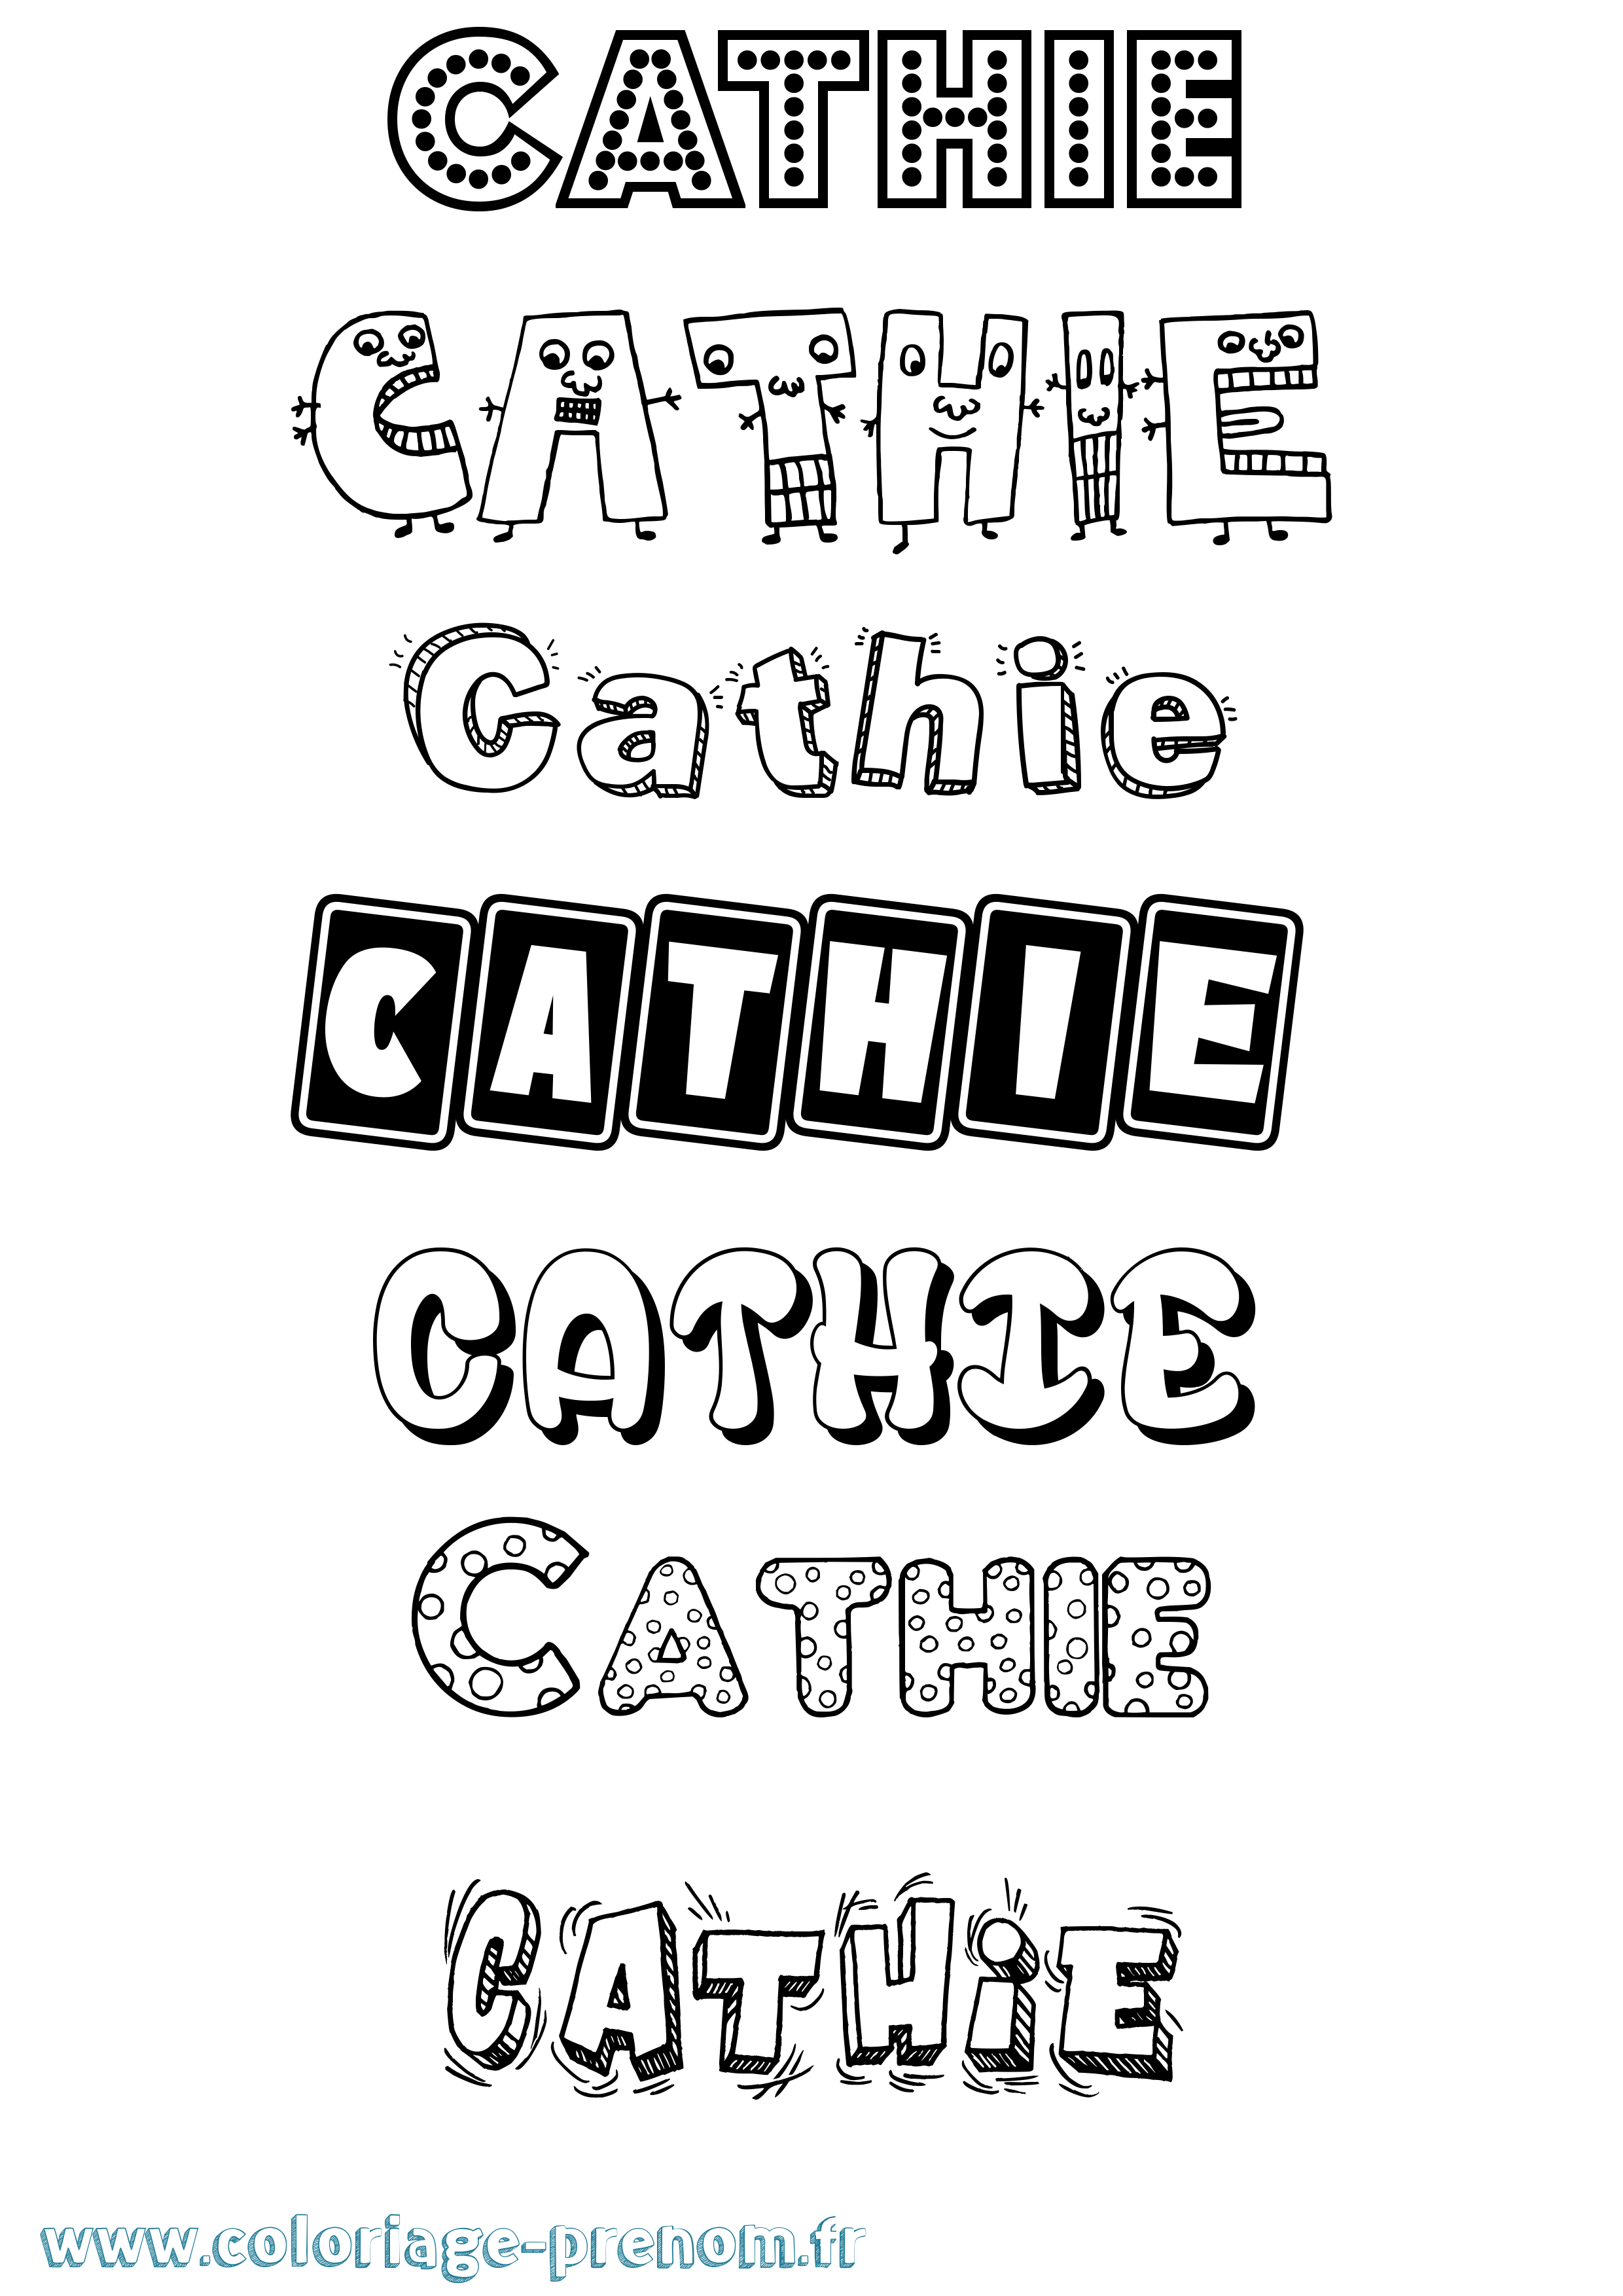 Coloriage prénom Cathie Fun